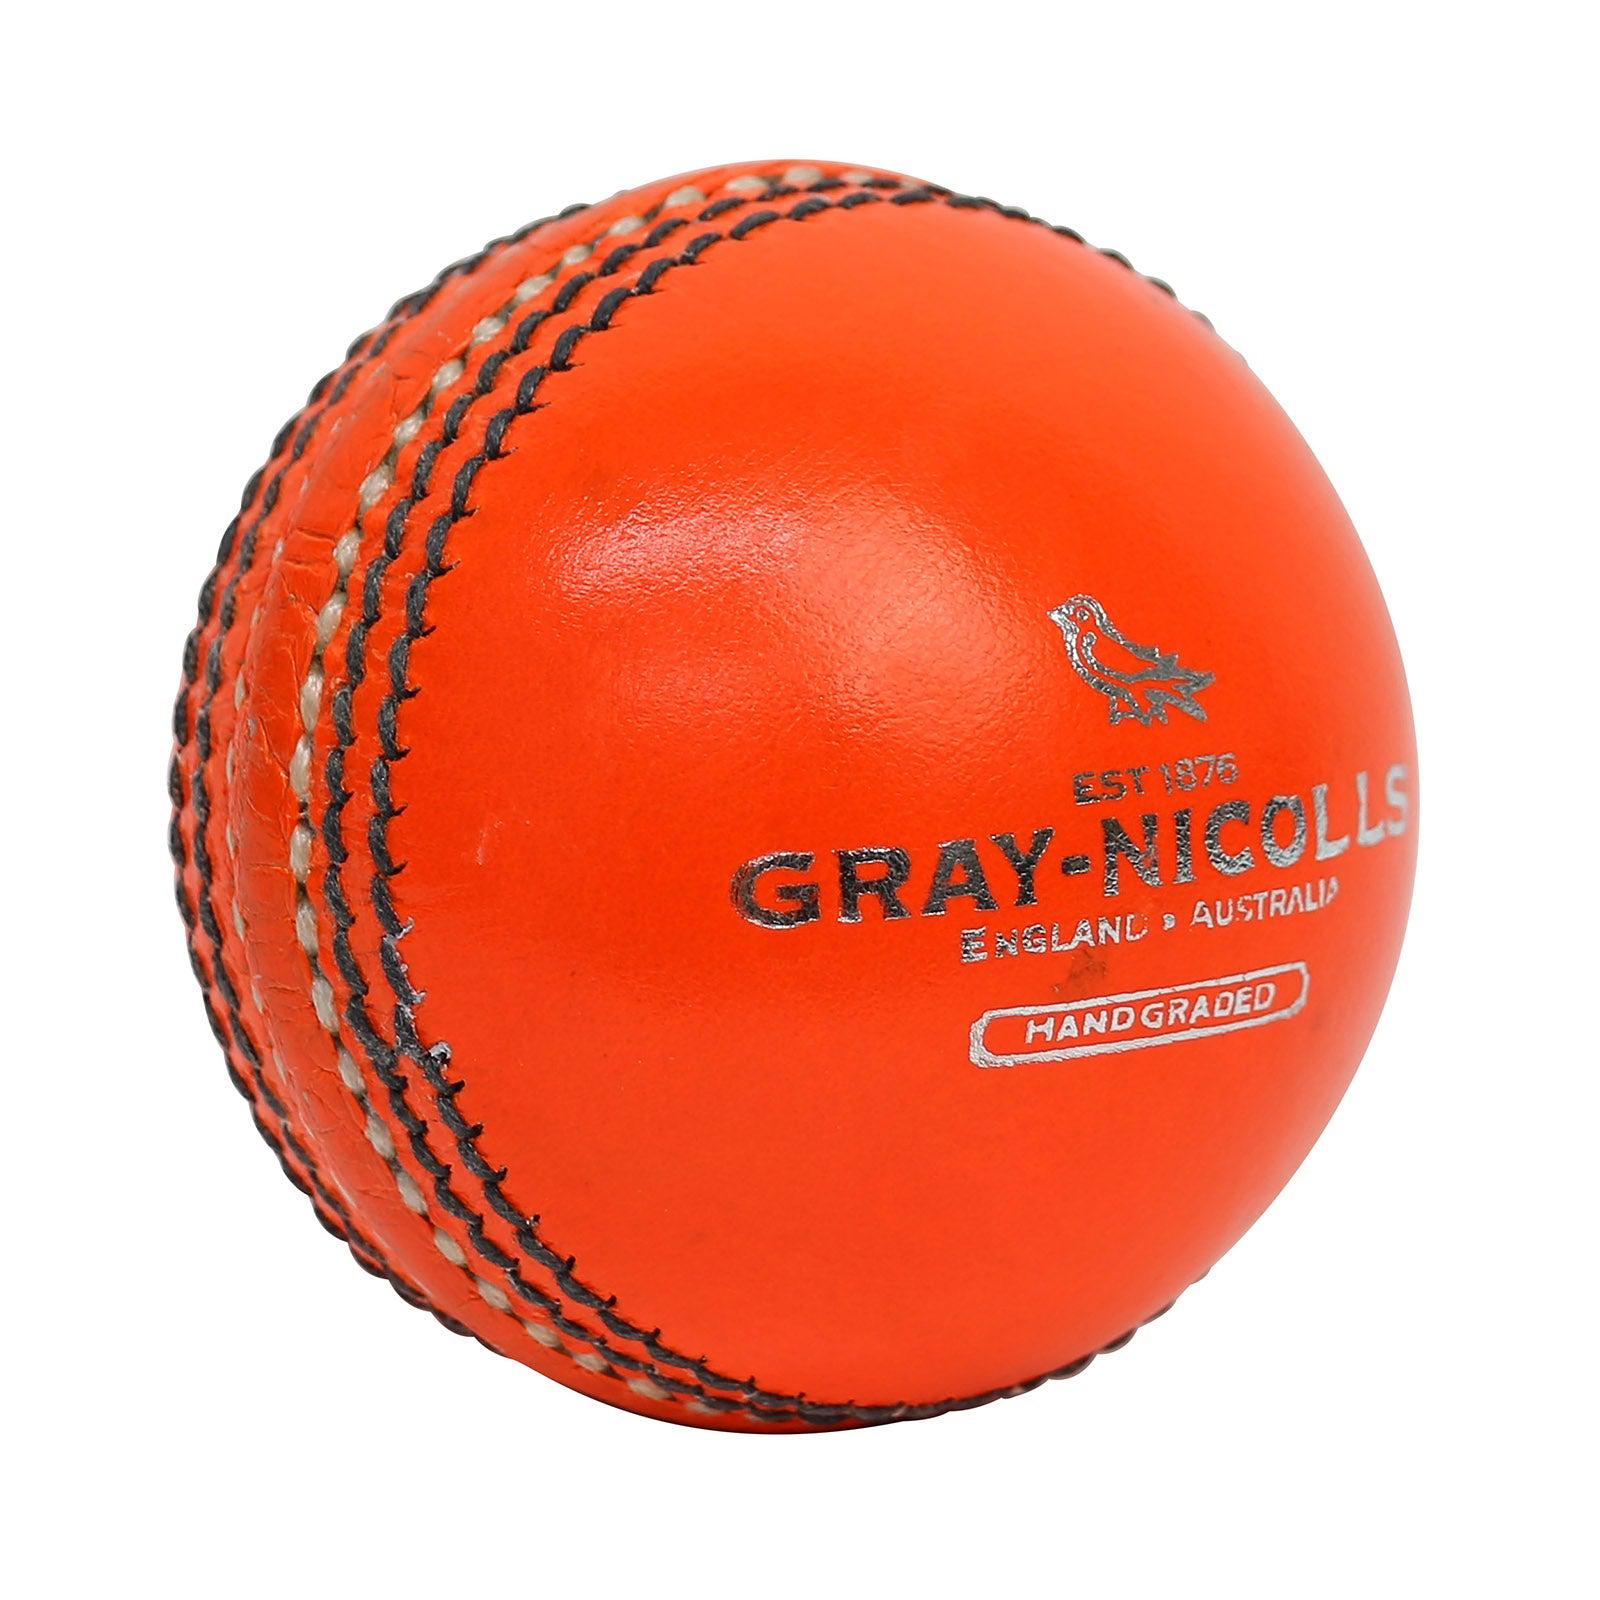 Gray Nicolls Crest Special 2 Pc Ball - Orange 156g